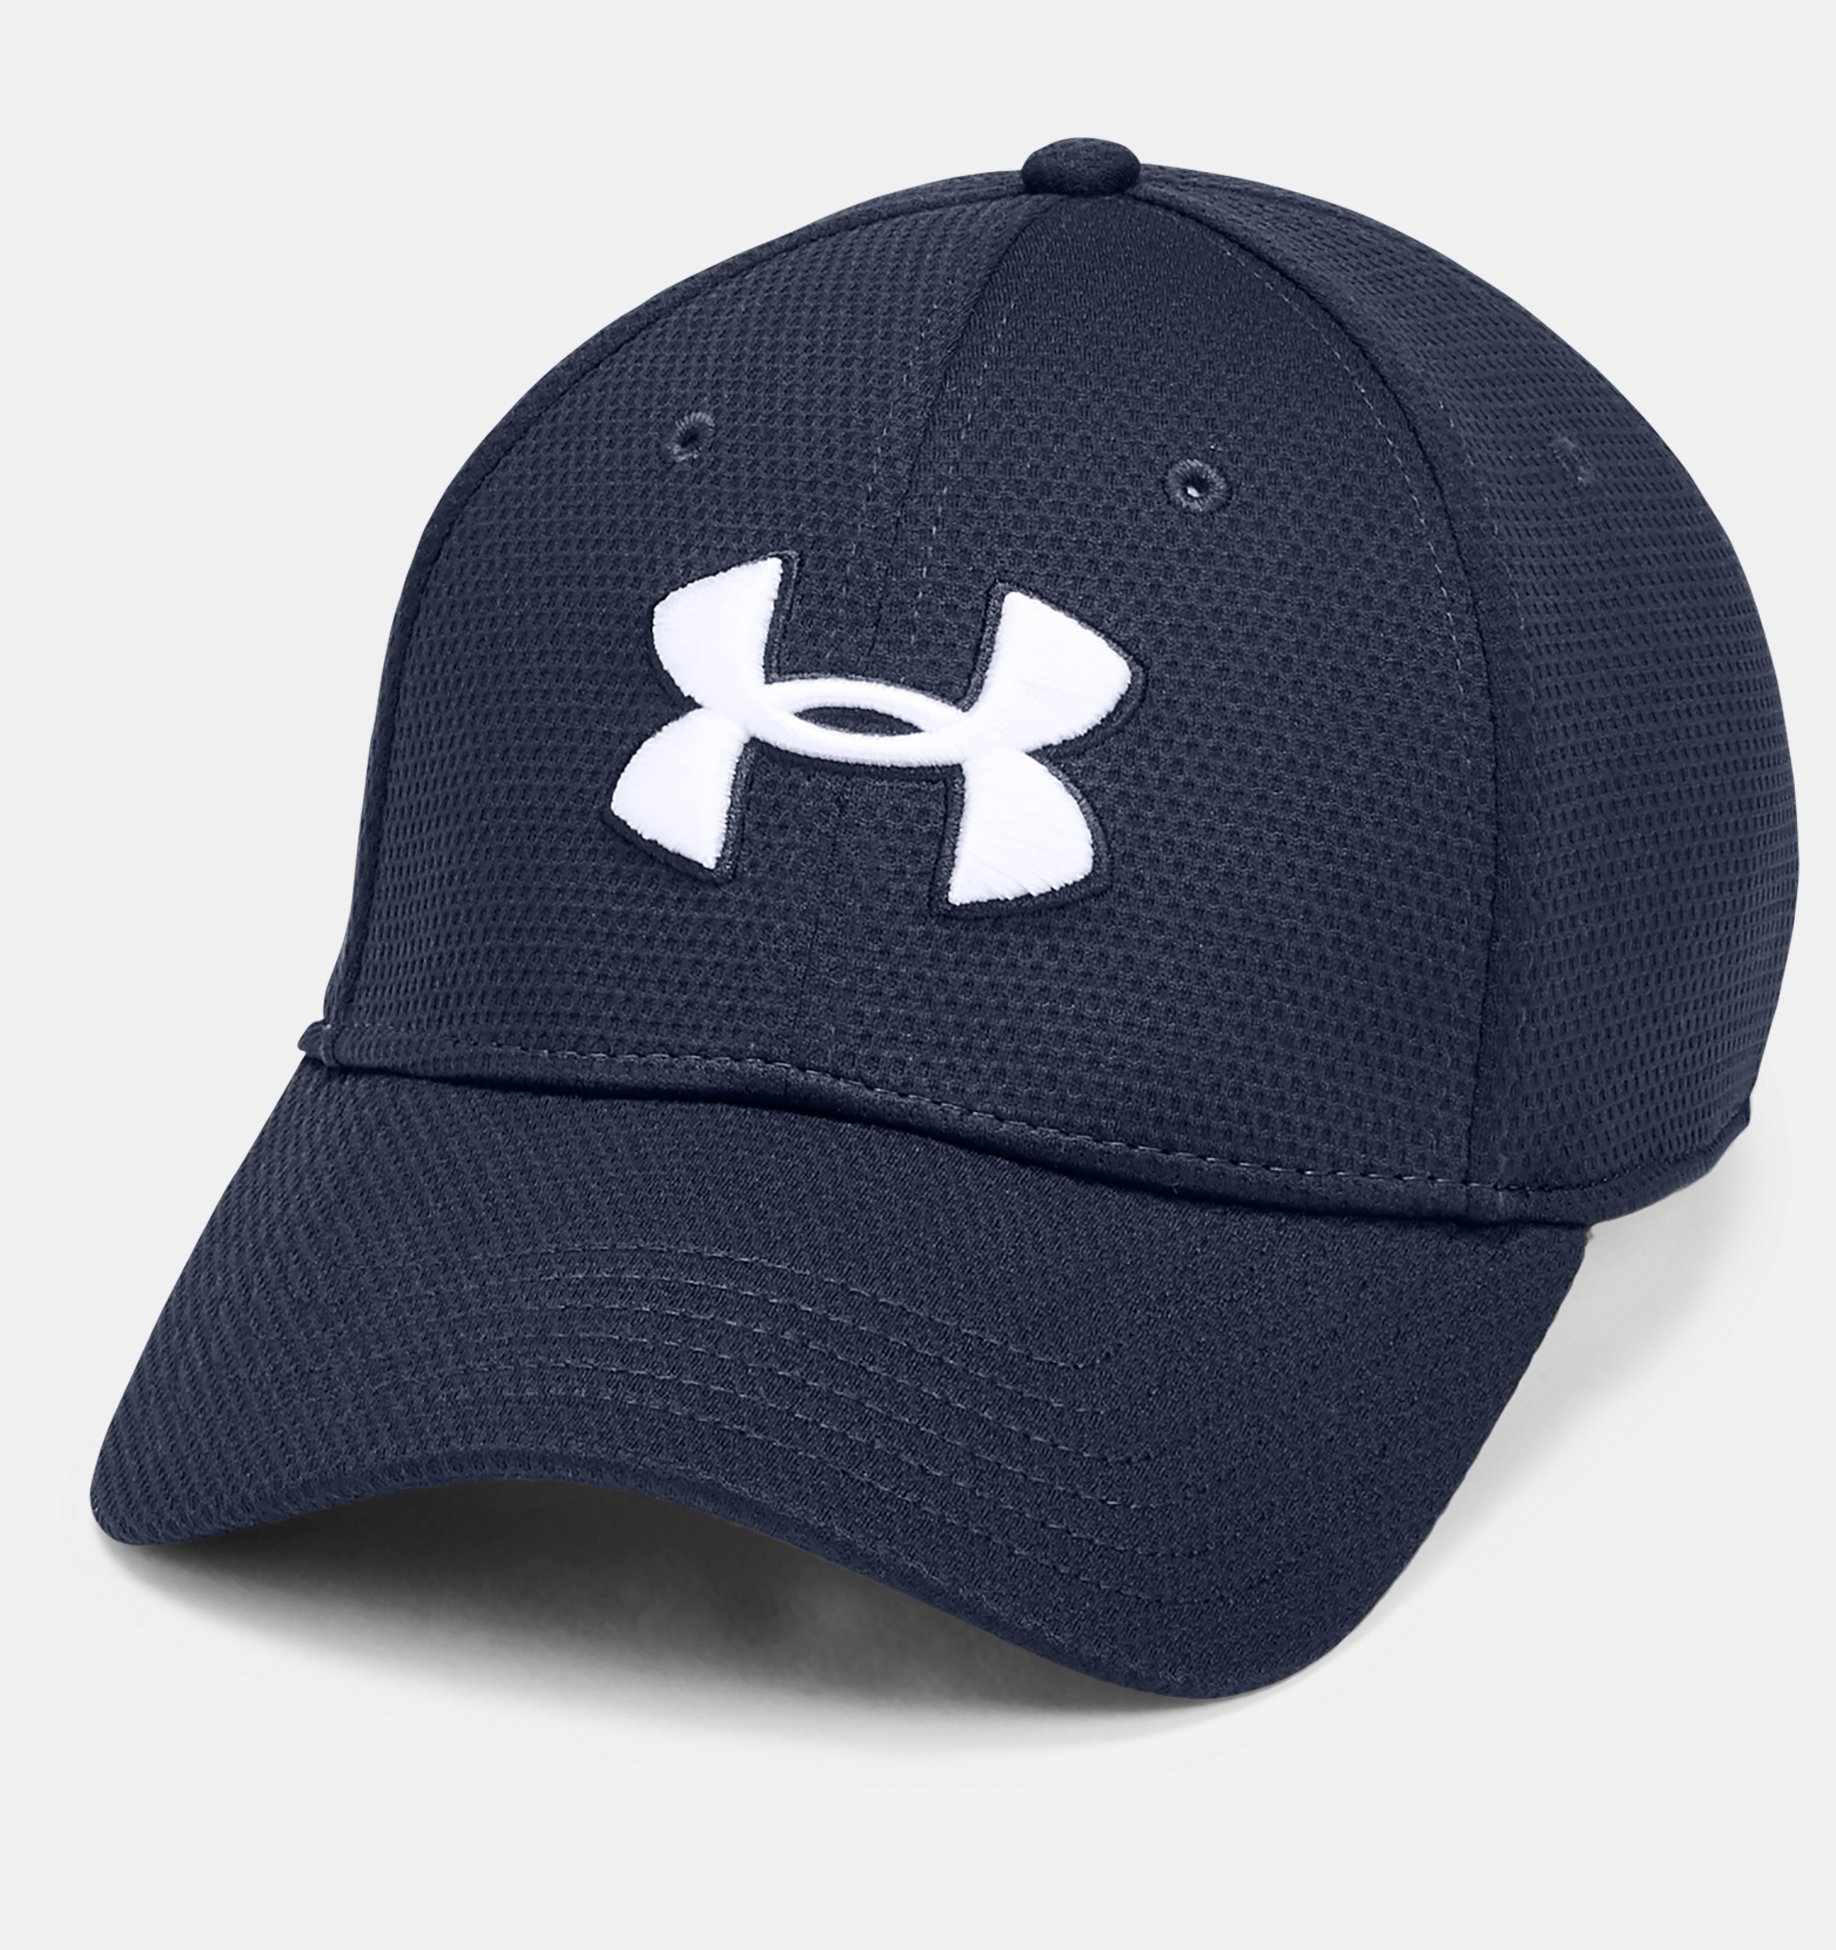 LG/XL New Men's Under Armour Stretch Fit Hat Flex Cap Size M/L XL/2XL 